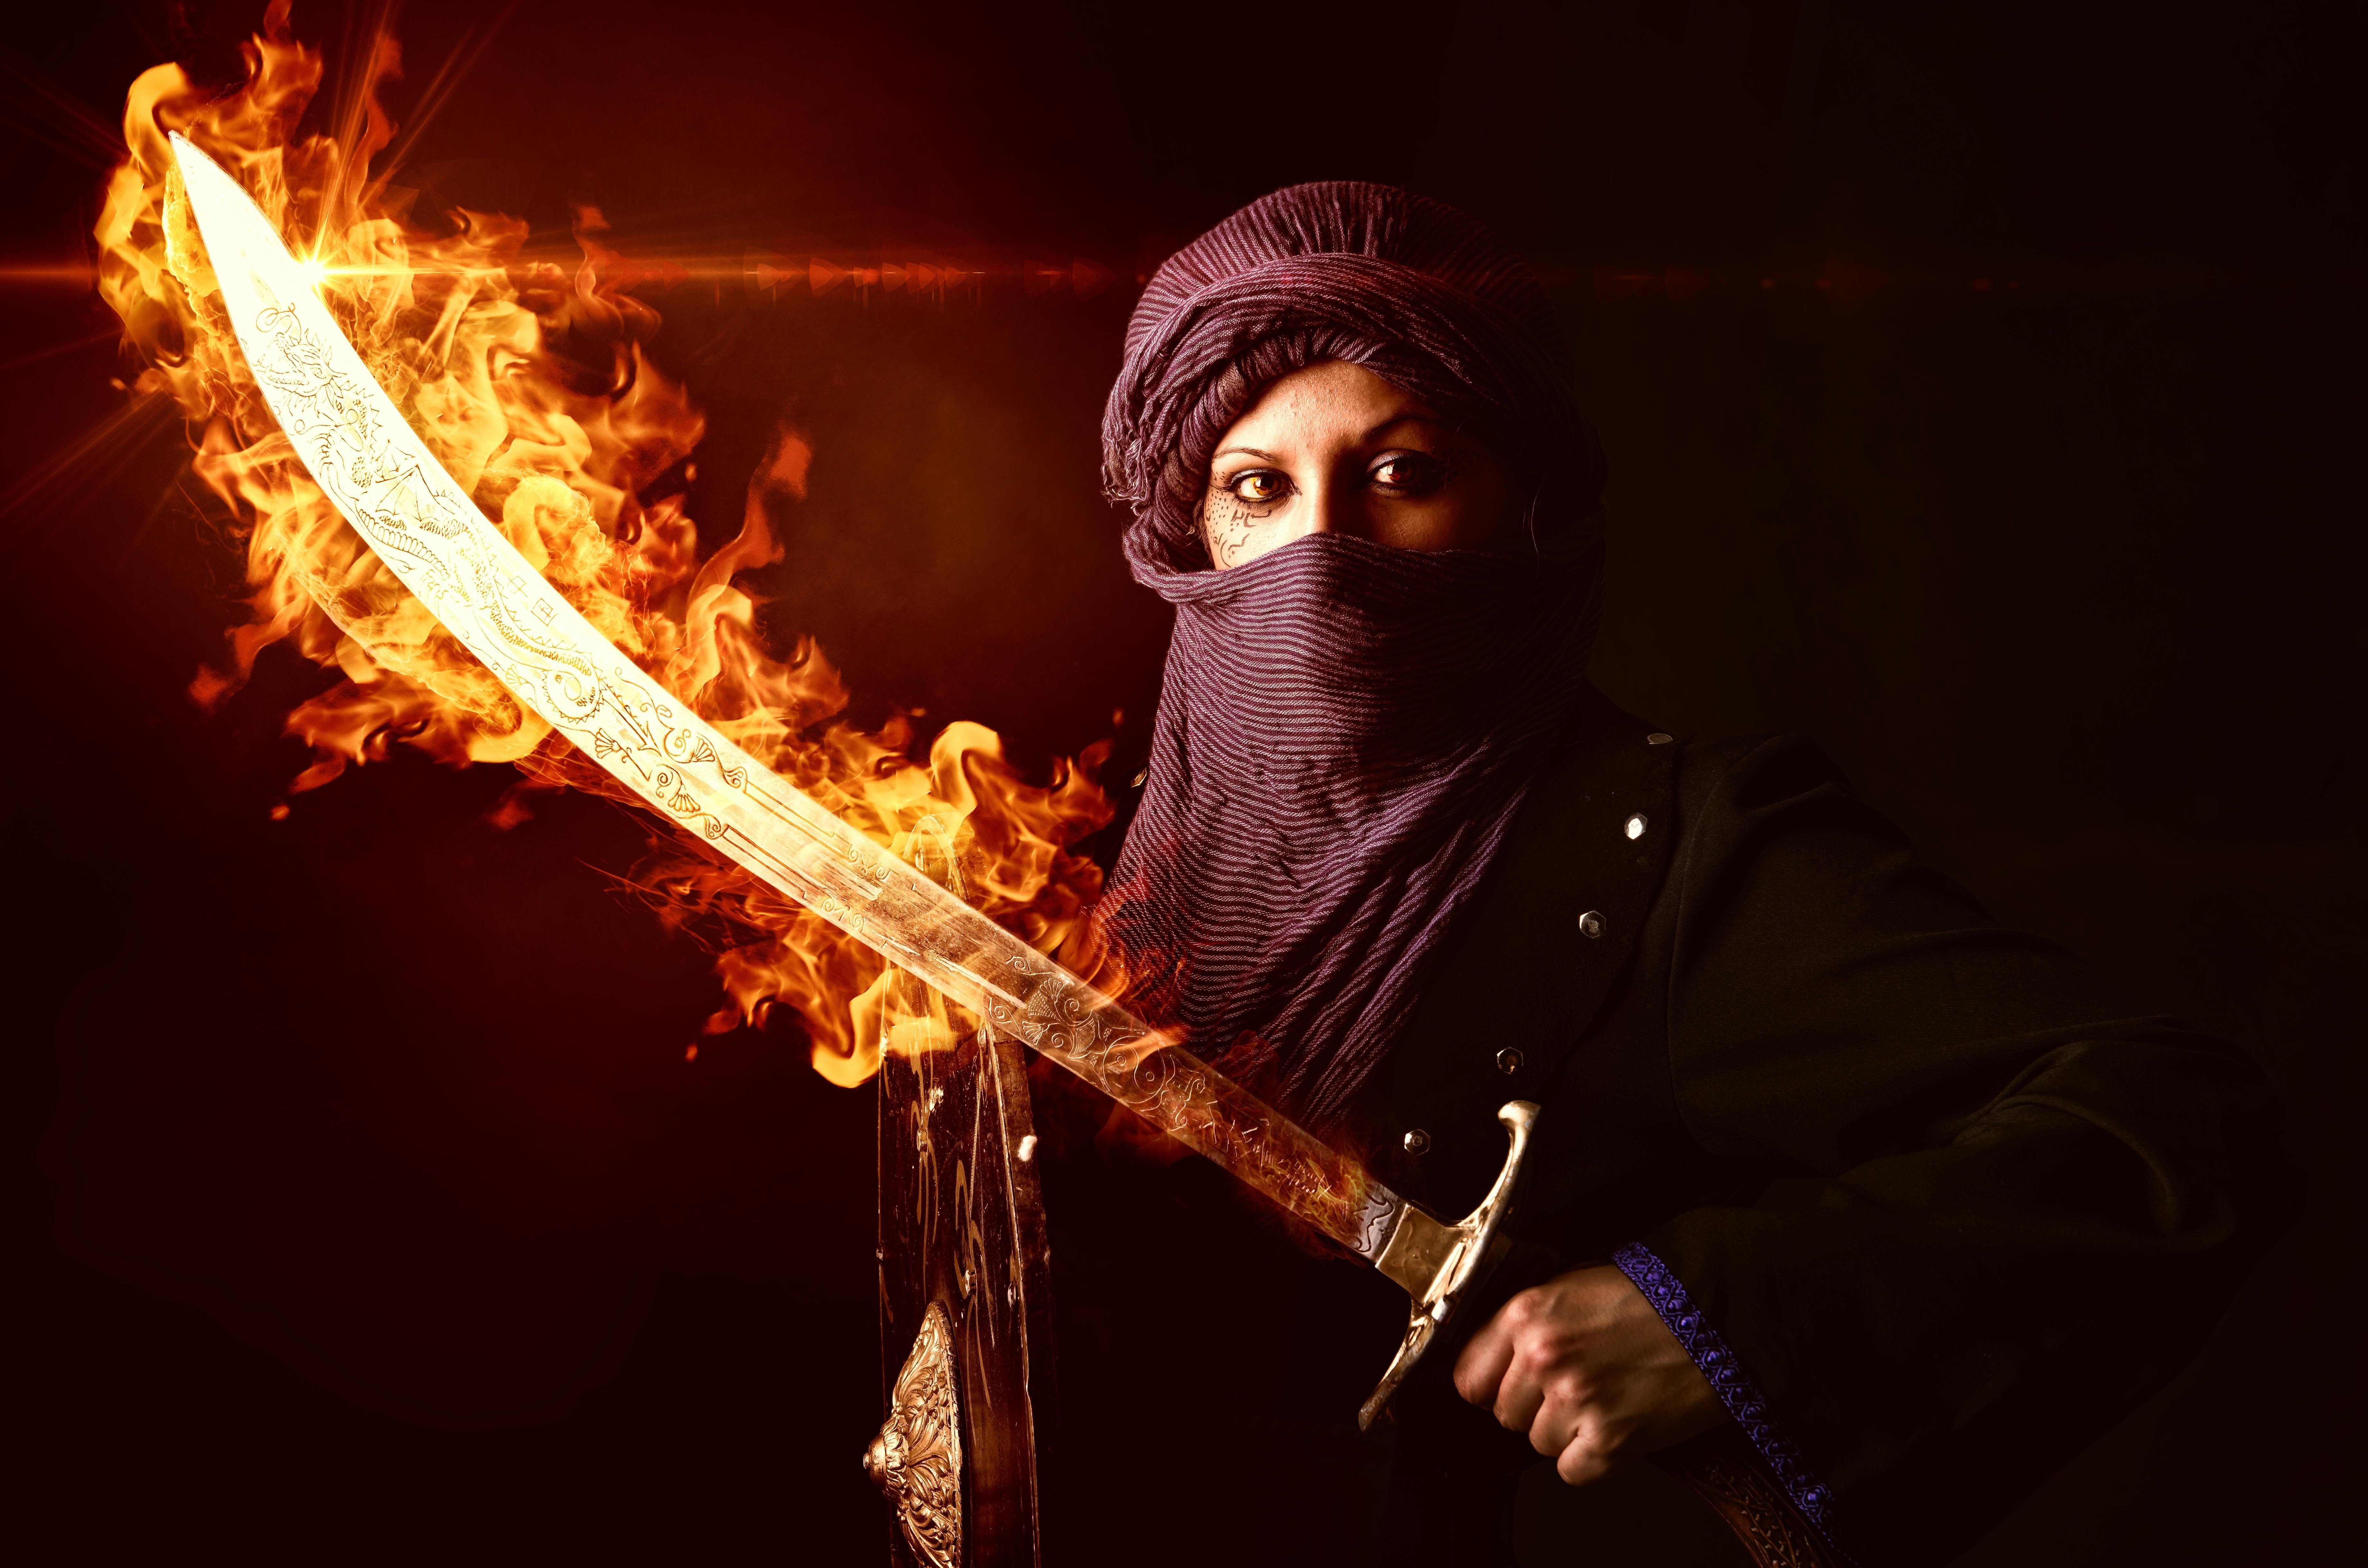 Download Wallpaper Fire Girl Sword, 7360x Arab Girl Warrior With A Burning Sword